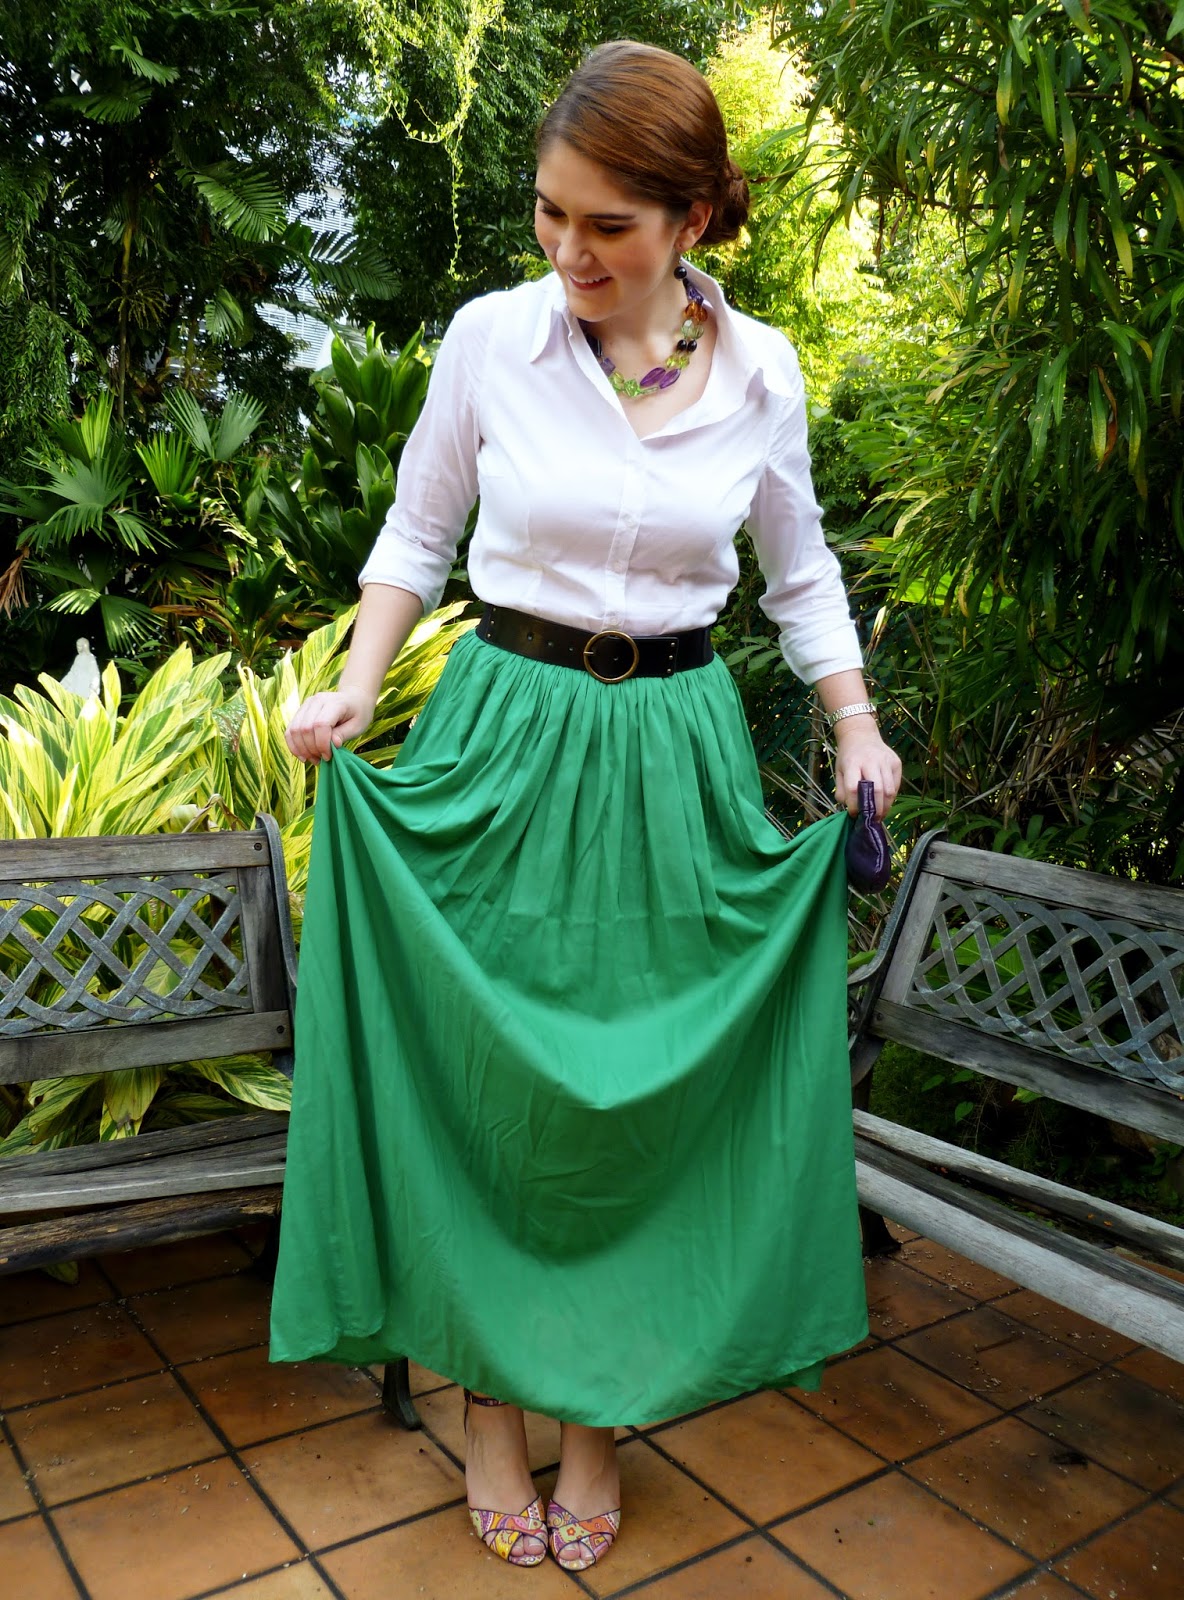 zara maxi skirt, green maxi skirt, maxi skirt outfit, spring fashion, spring outfit ideas, fashion blogger, white shirt outfit